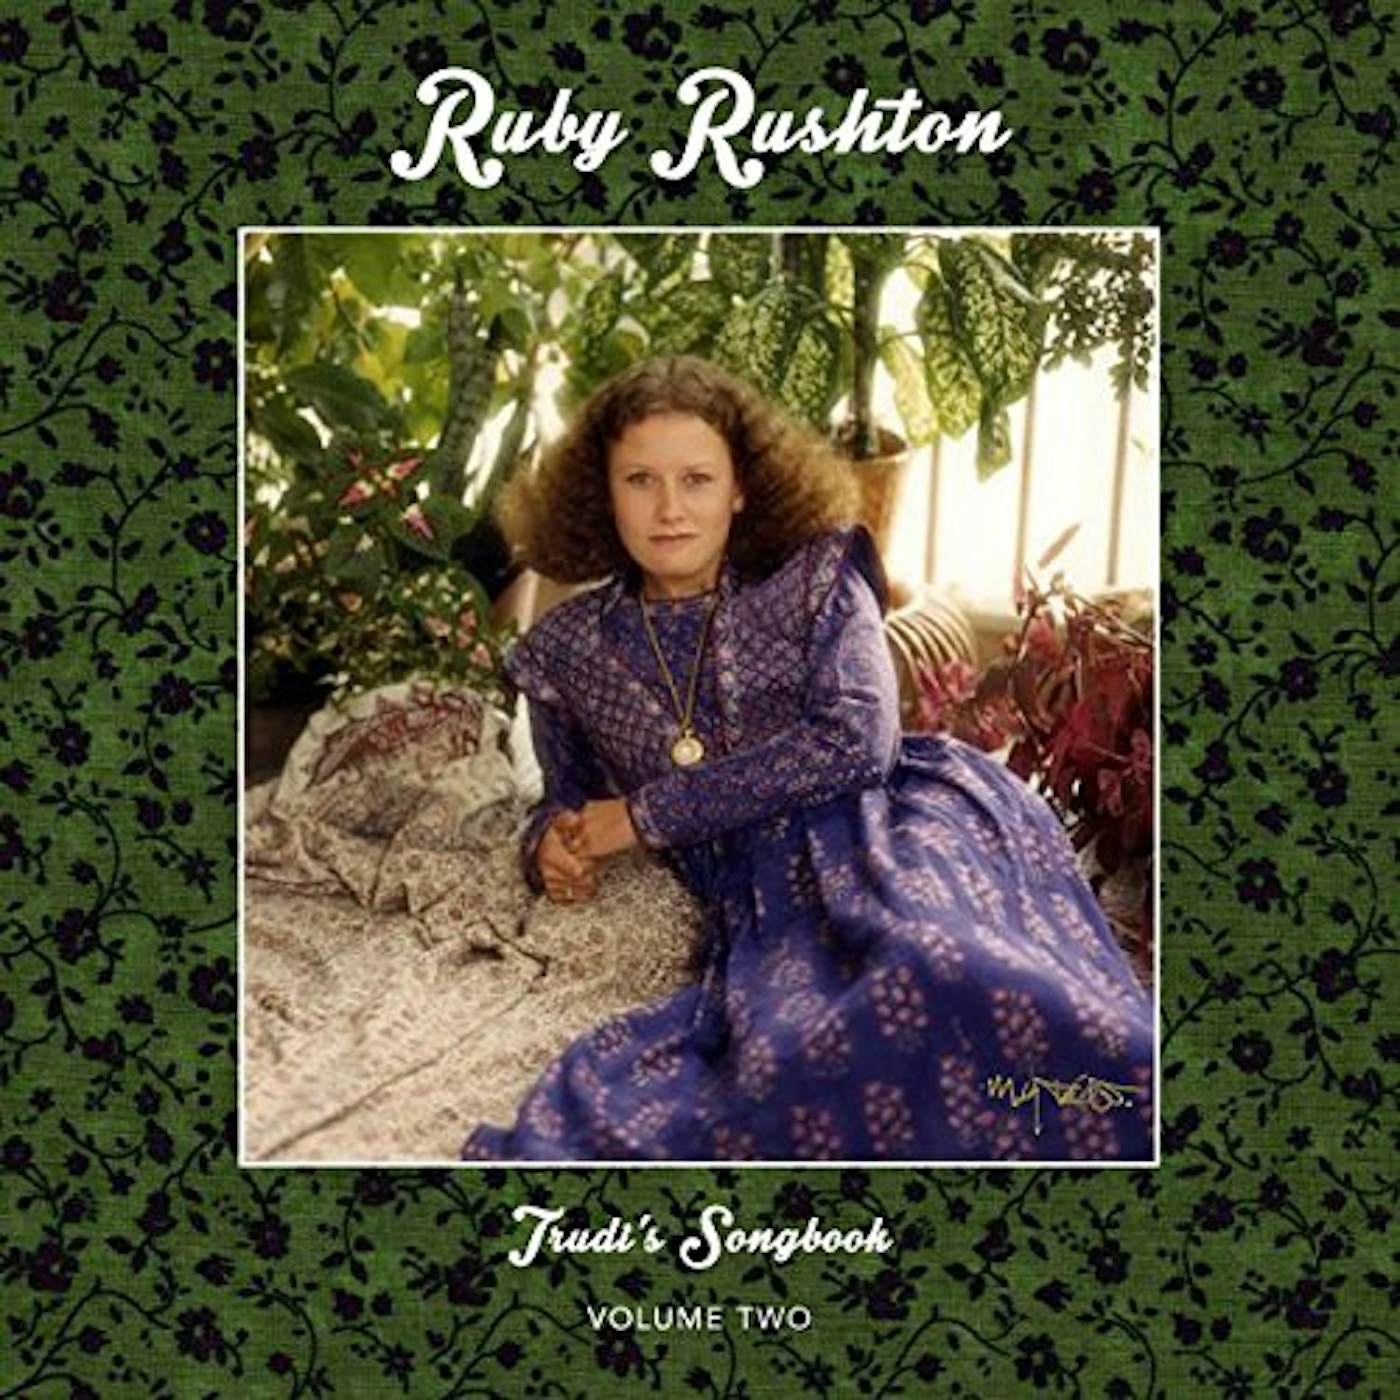 Ruby Rushton TRUDI'S SONGBOOK: 2 Vinyl Record